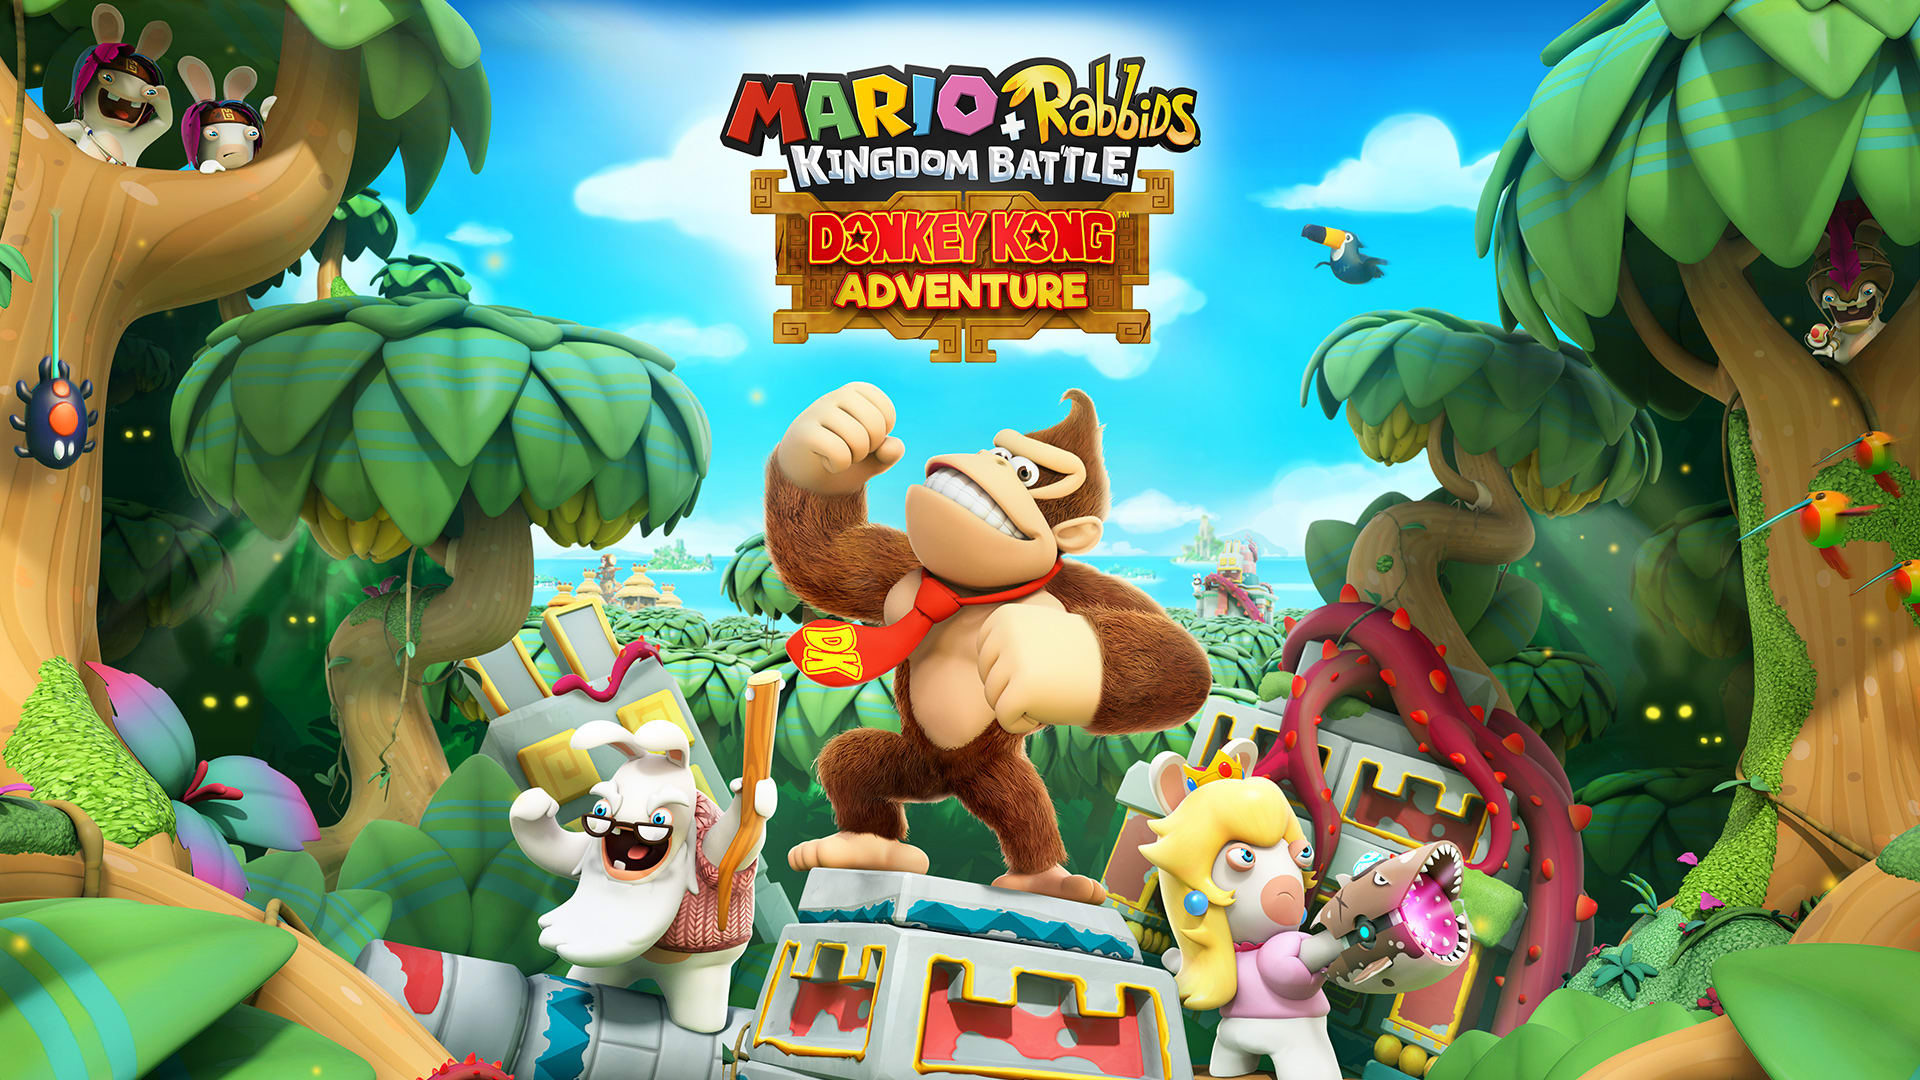 Mario + Rabbids® Kingdom Battle Donkey Kong Adventure